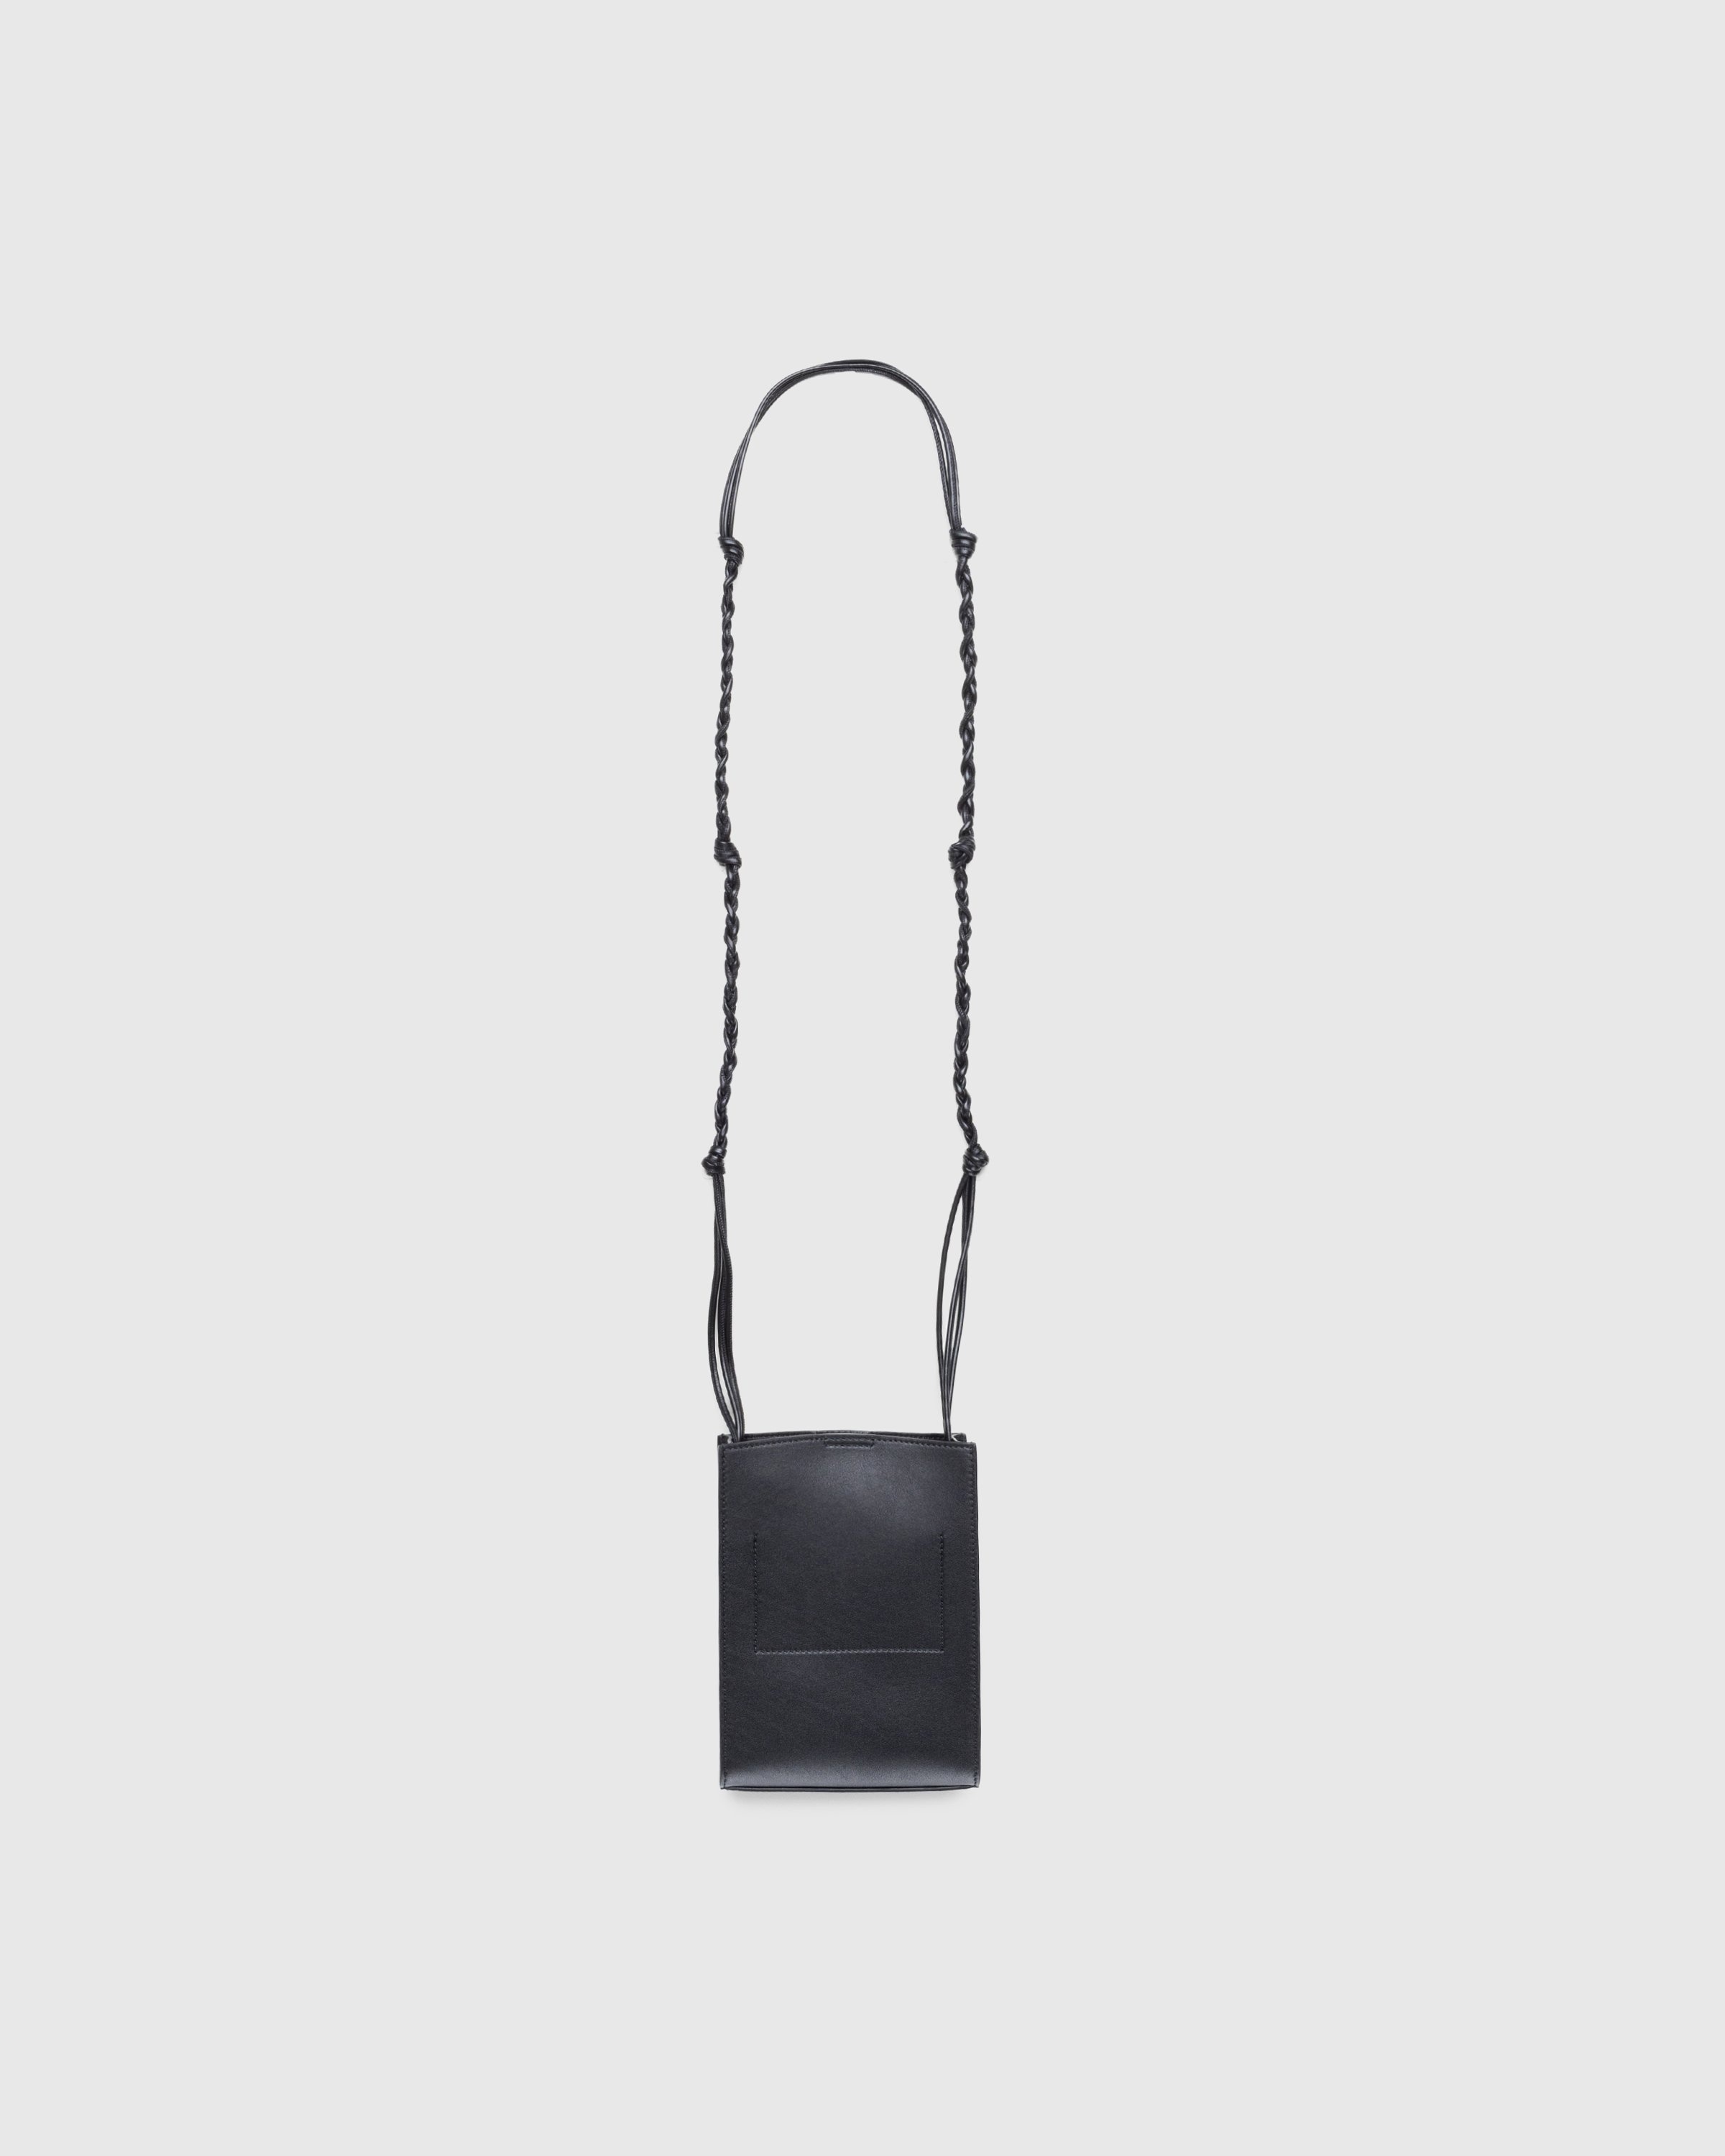 Jil Sander – Tangle Small Bag Black | Highsnobiety Shop